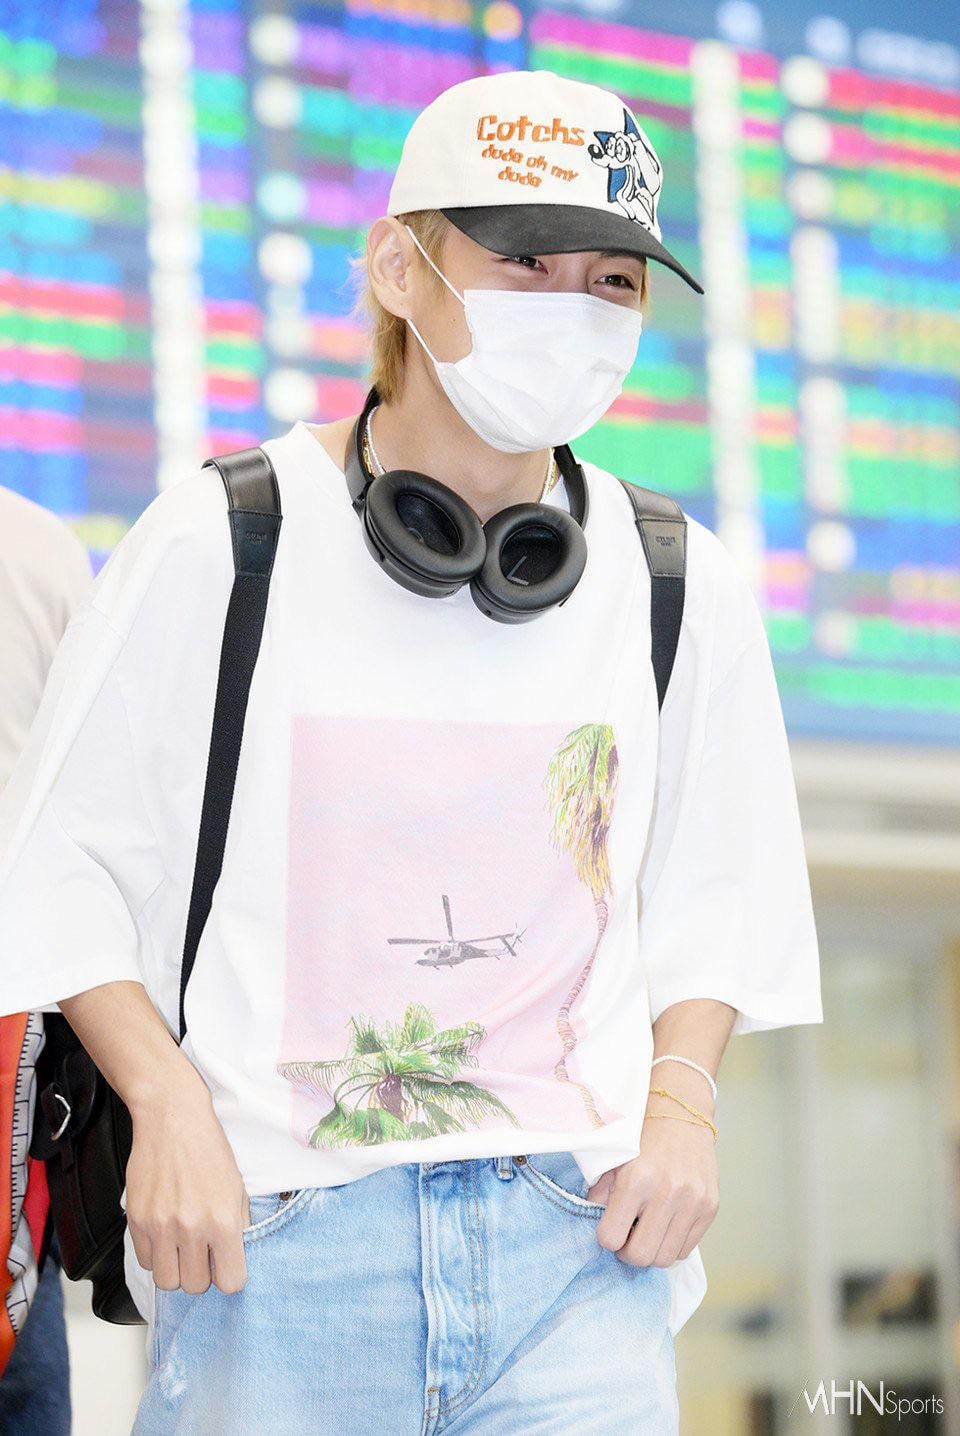 [KMedia] Taehyung Incheon Airport arrival photos - 160623